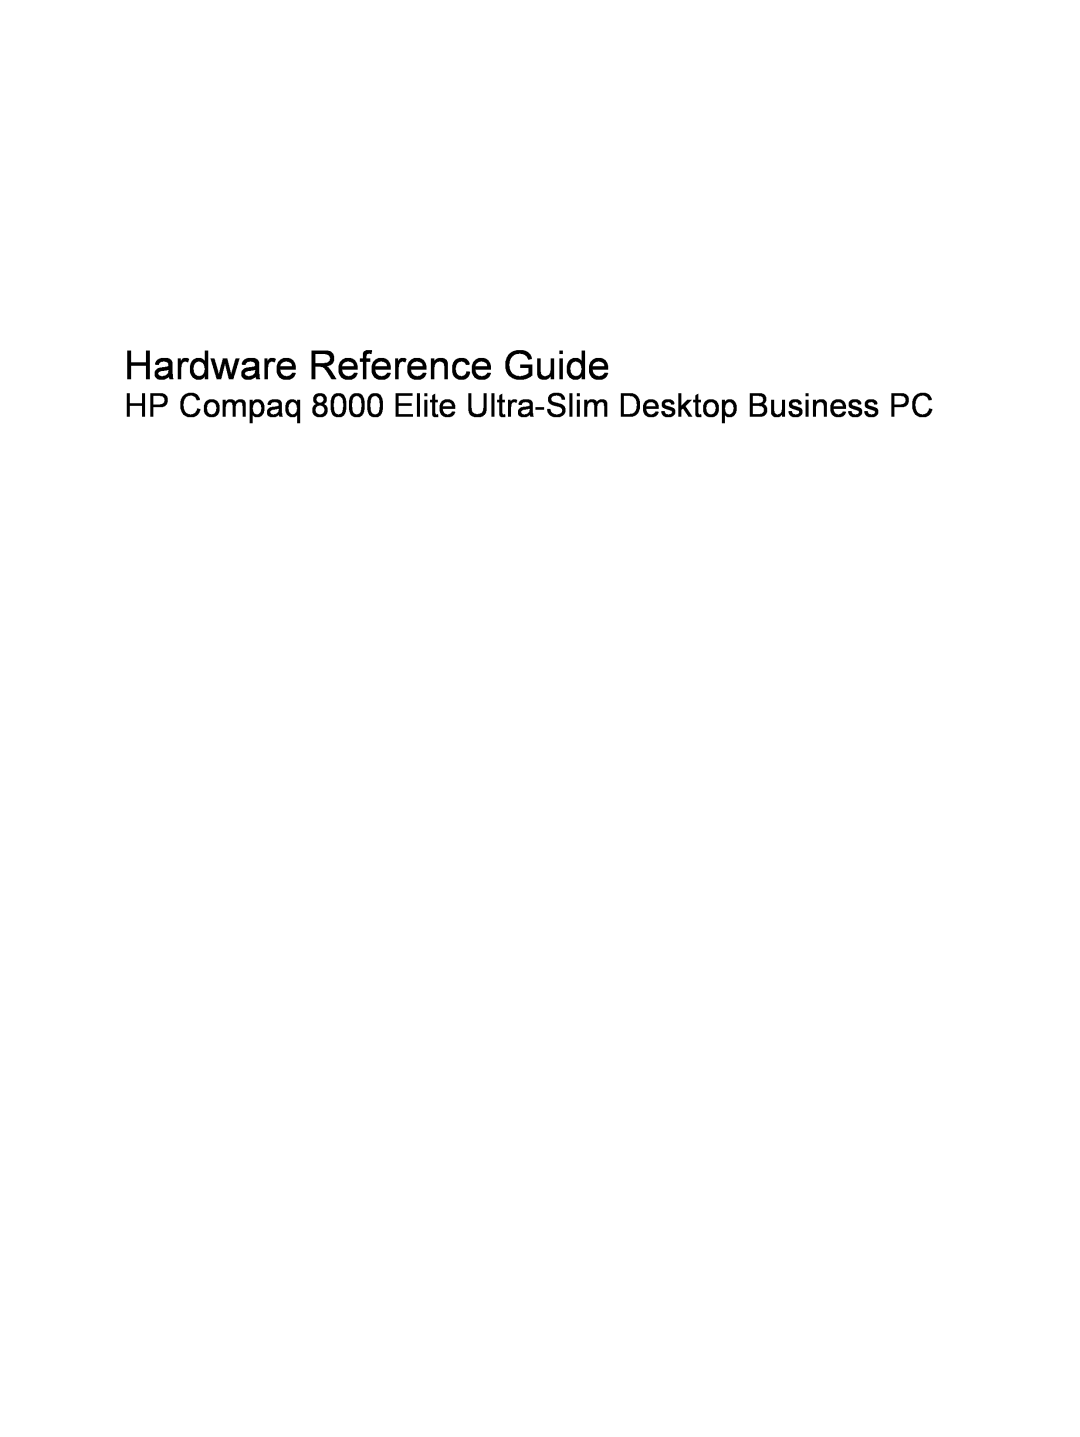 Hitachi manual Hardware Reference Guide, HP Compaq 8000 Elite Ultra-Slim Desktop Business PC 